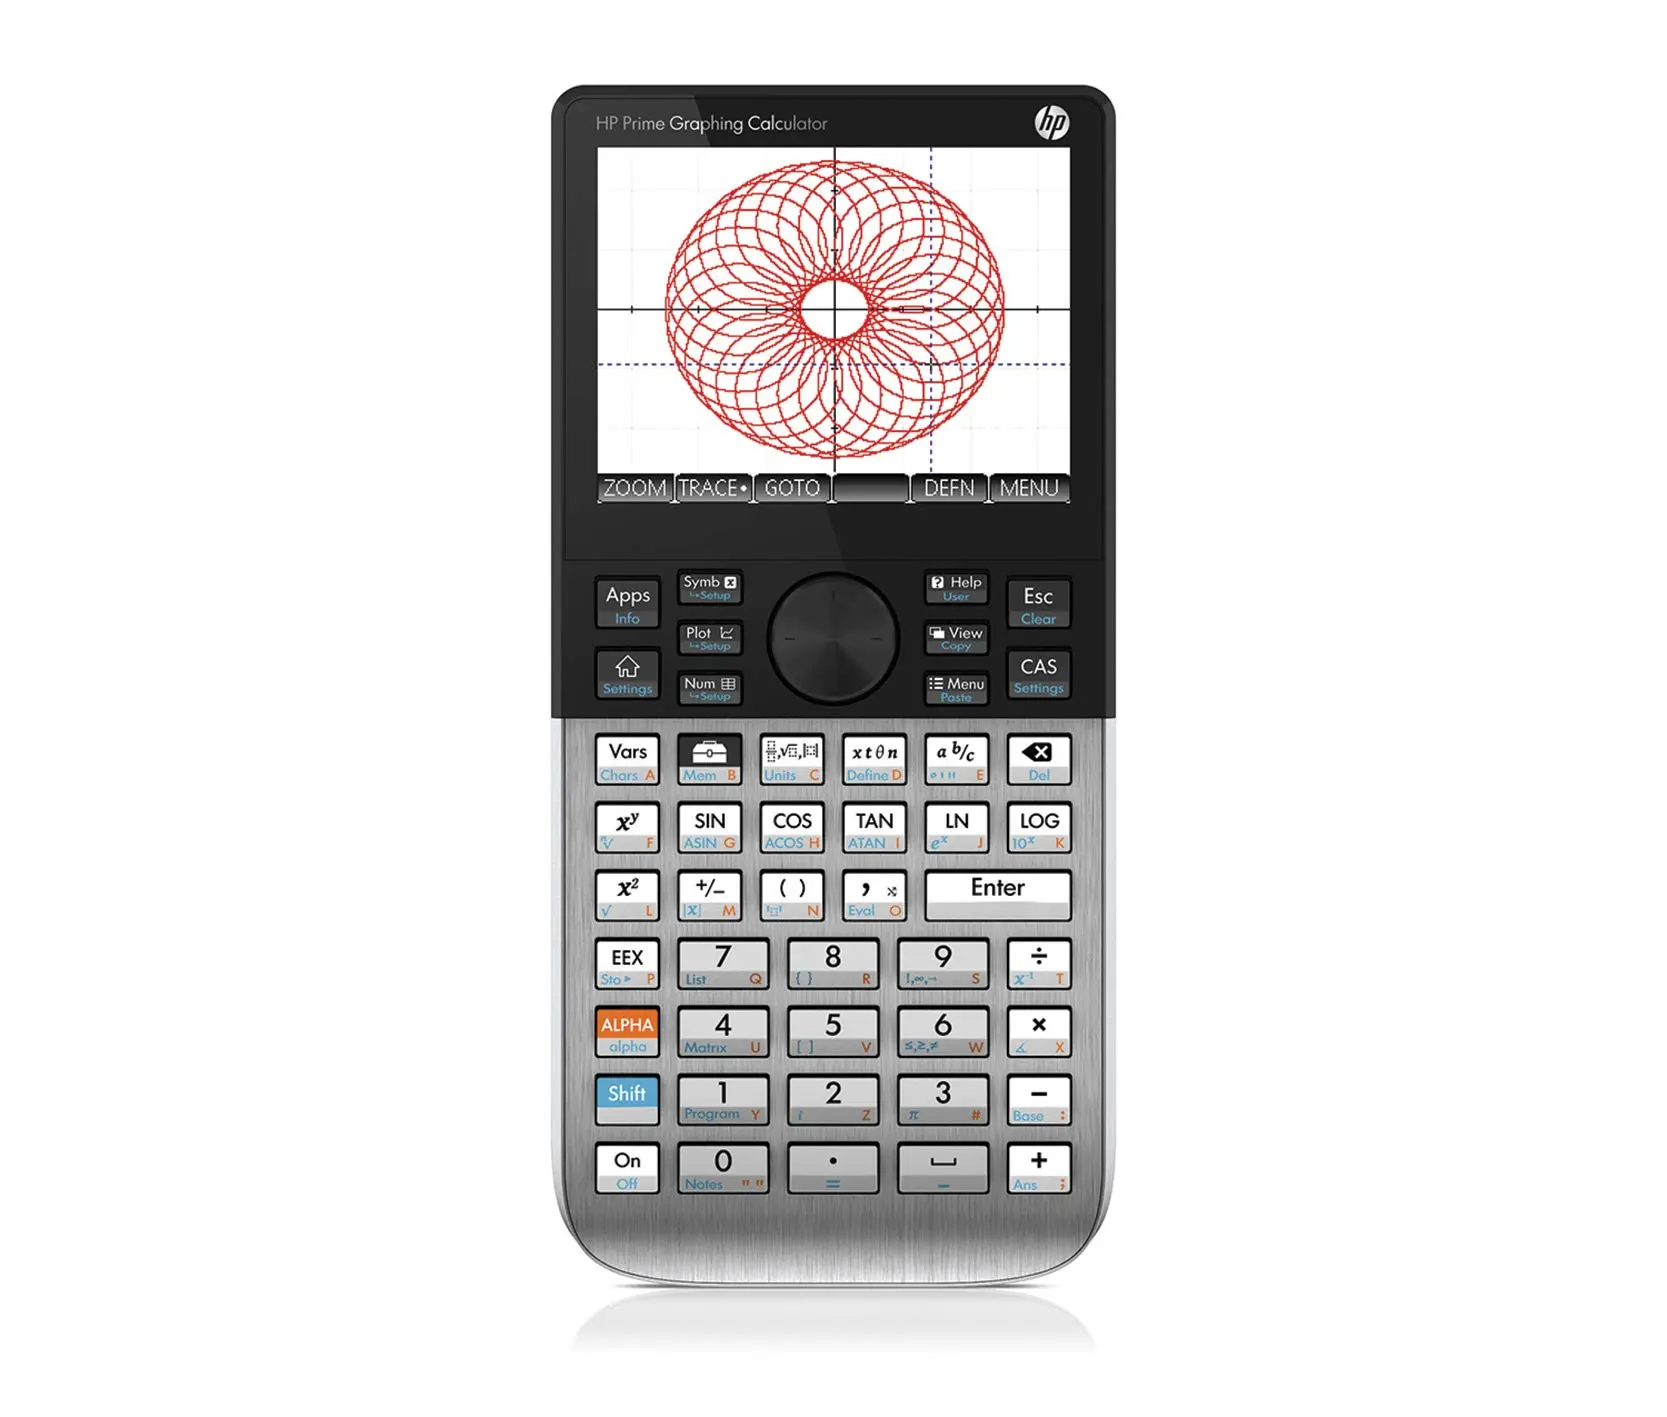 hewlett packard prime graphing calculator - How do I update my HP prime graphing calculator